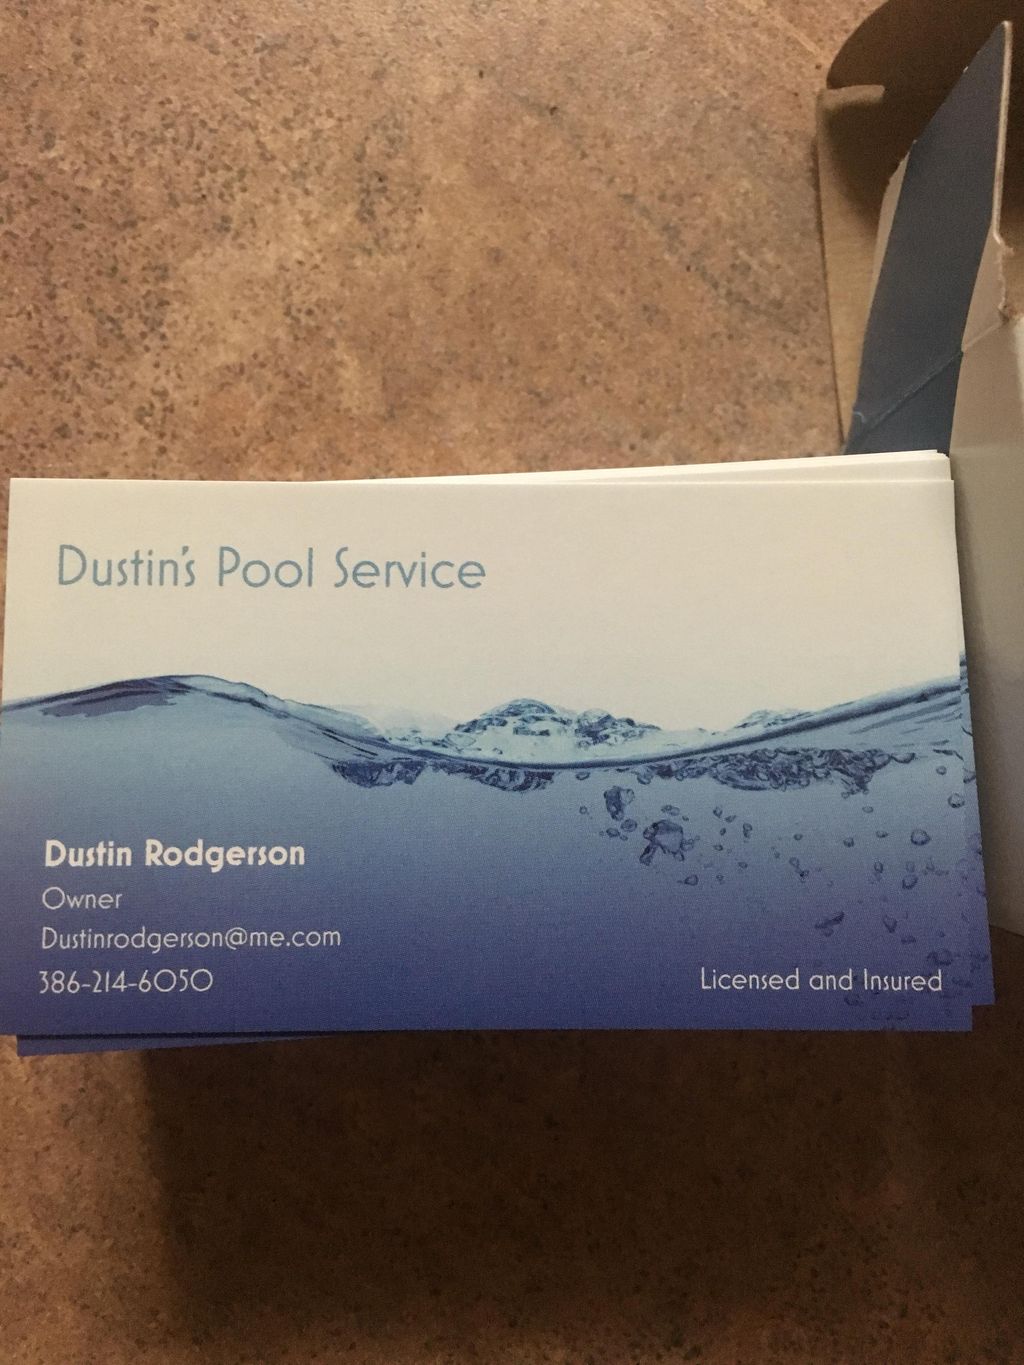 Dustin’s Pool Service